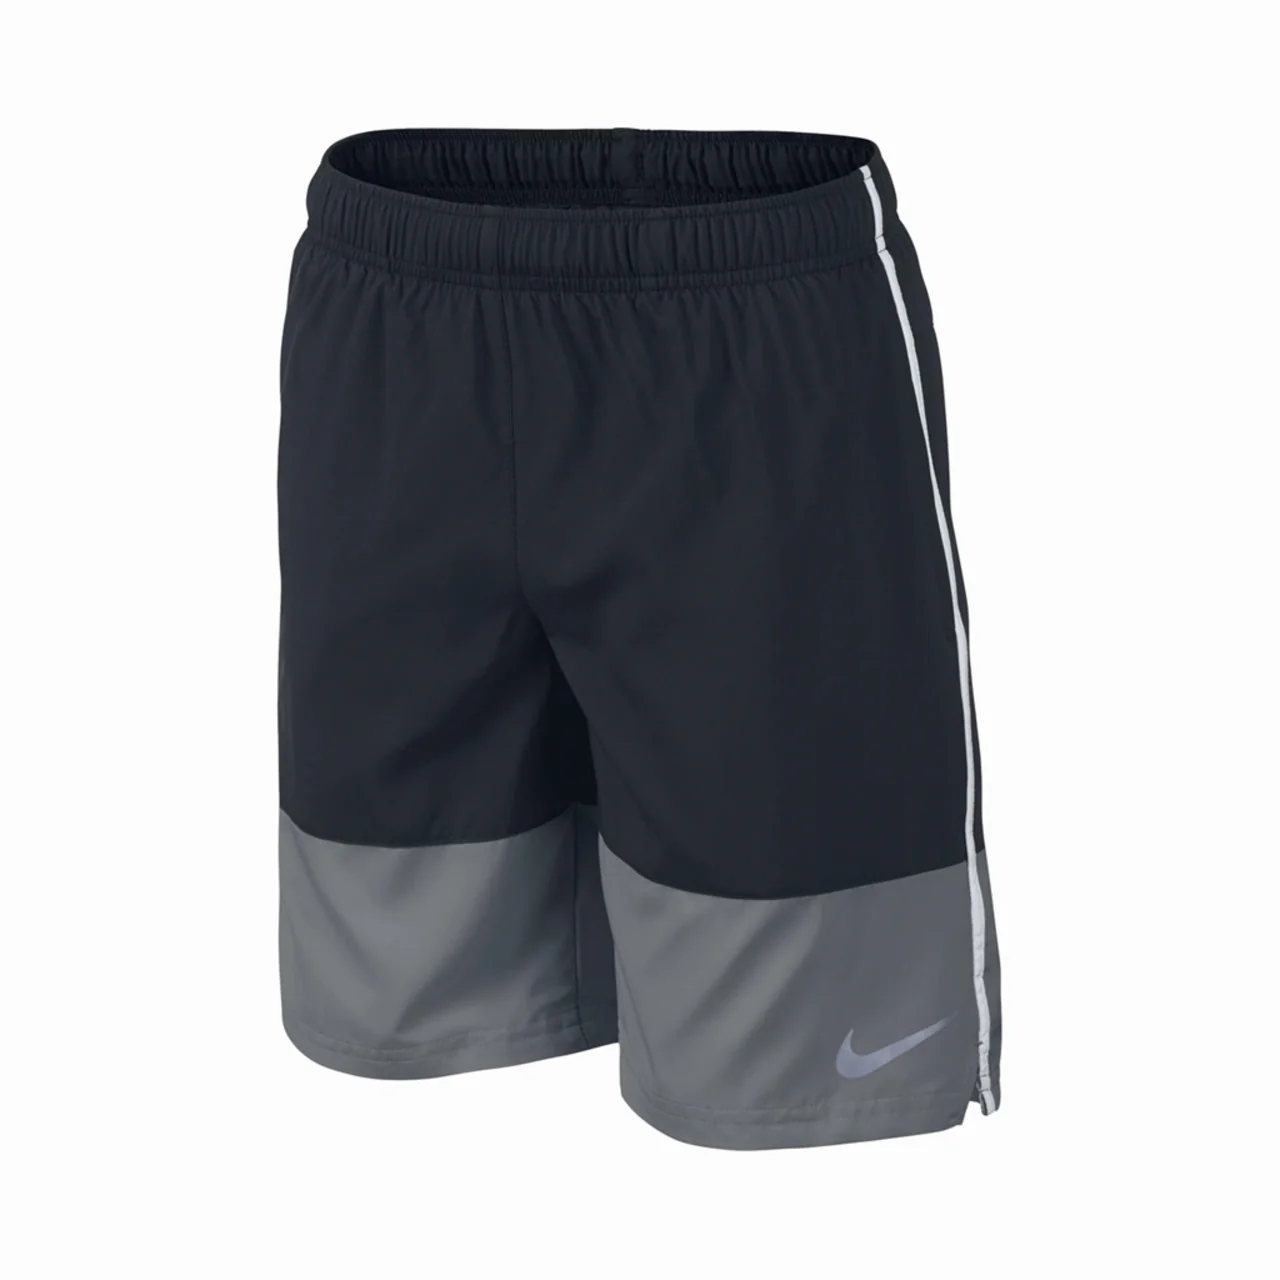 Nike Distance Shorts Boy Black/Grey